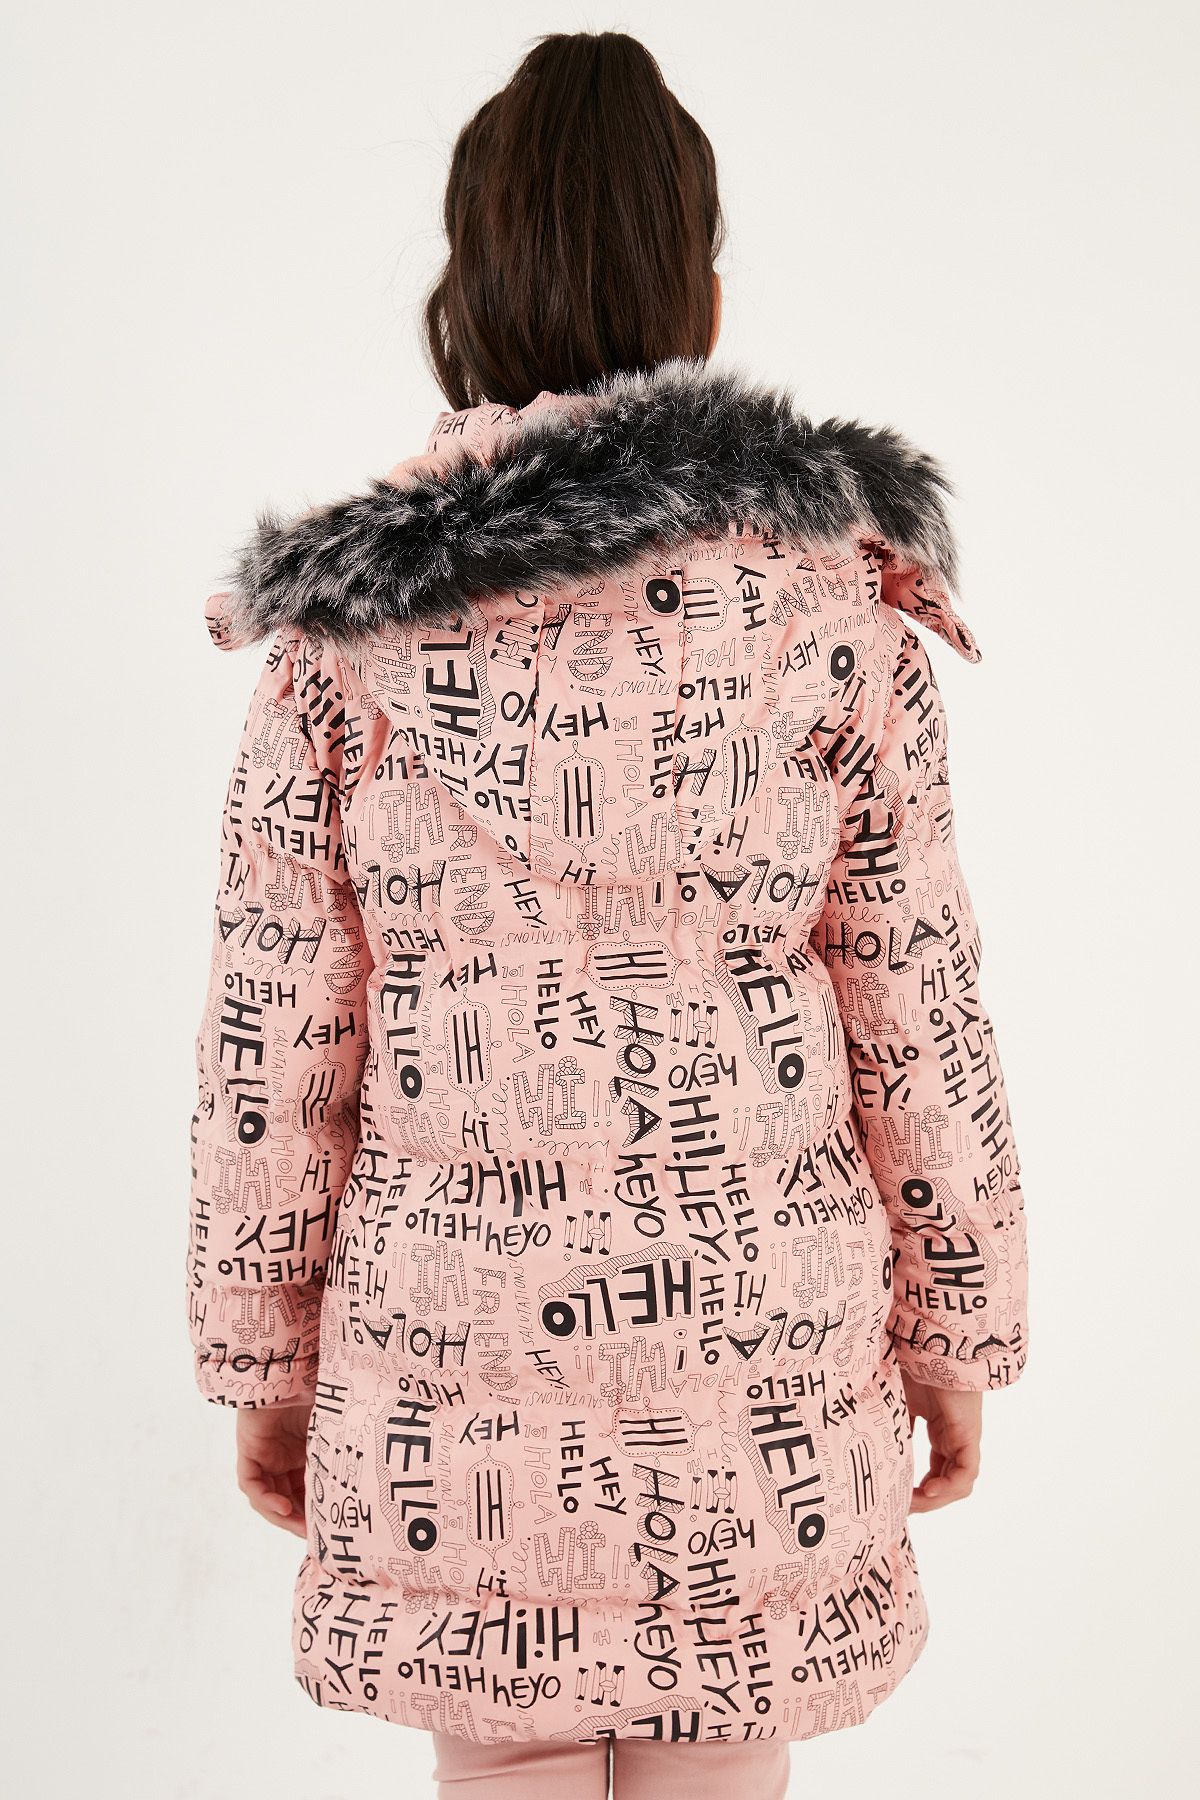 Lela کت خز مصنوعی چاپ شده با روکش مخمل دار متحرک زمستانی دخترانه Child MON